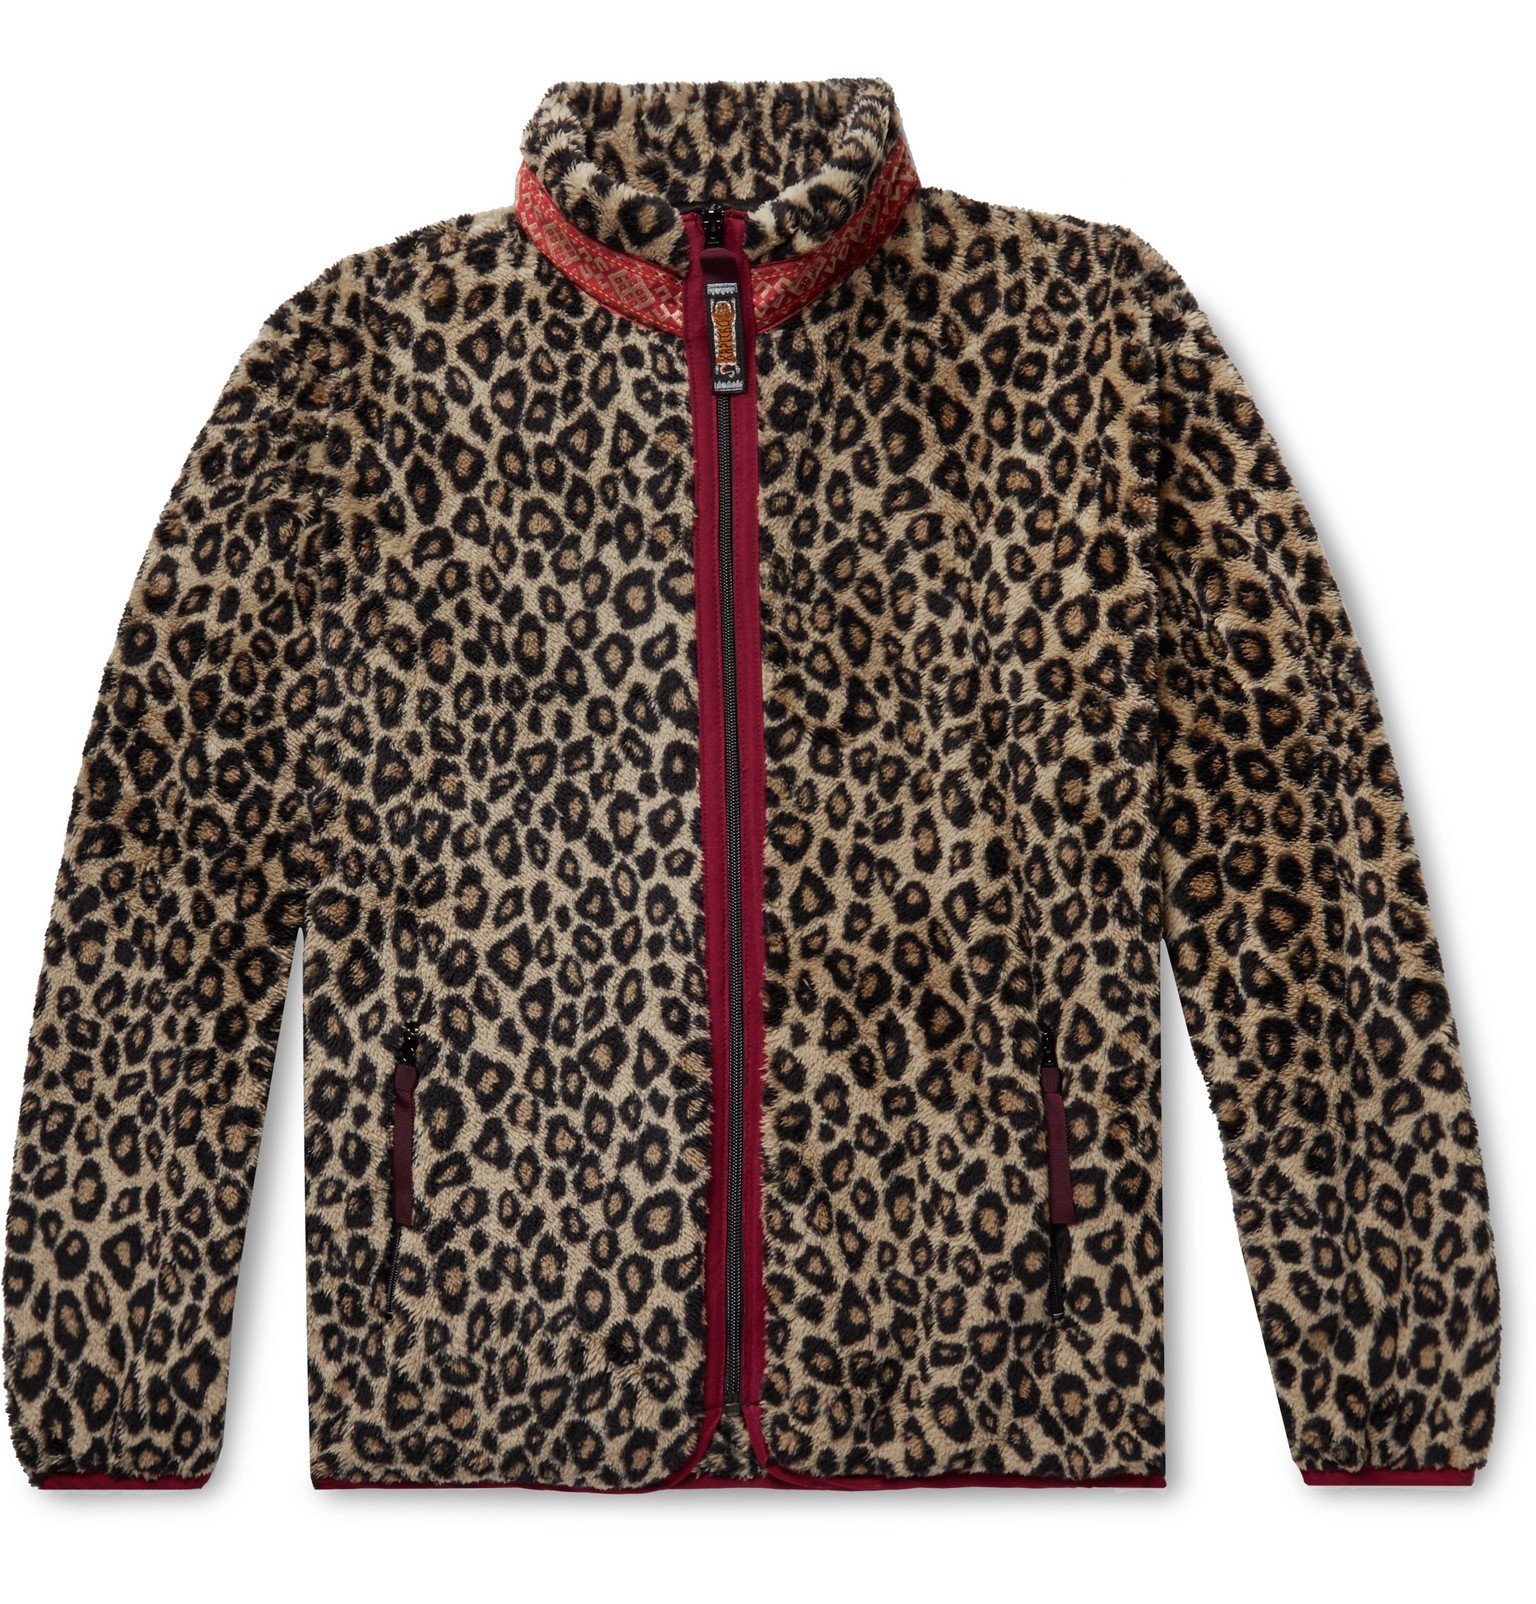 KAPITAL - Leopard-Print Fleece Jacket - Animal print KAPITAL